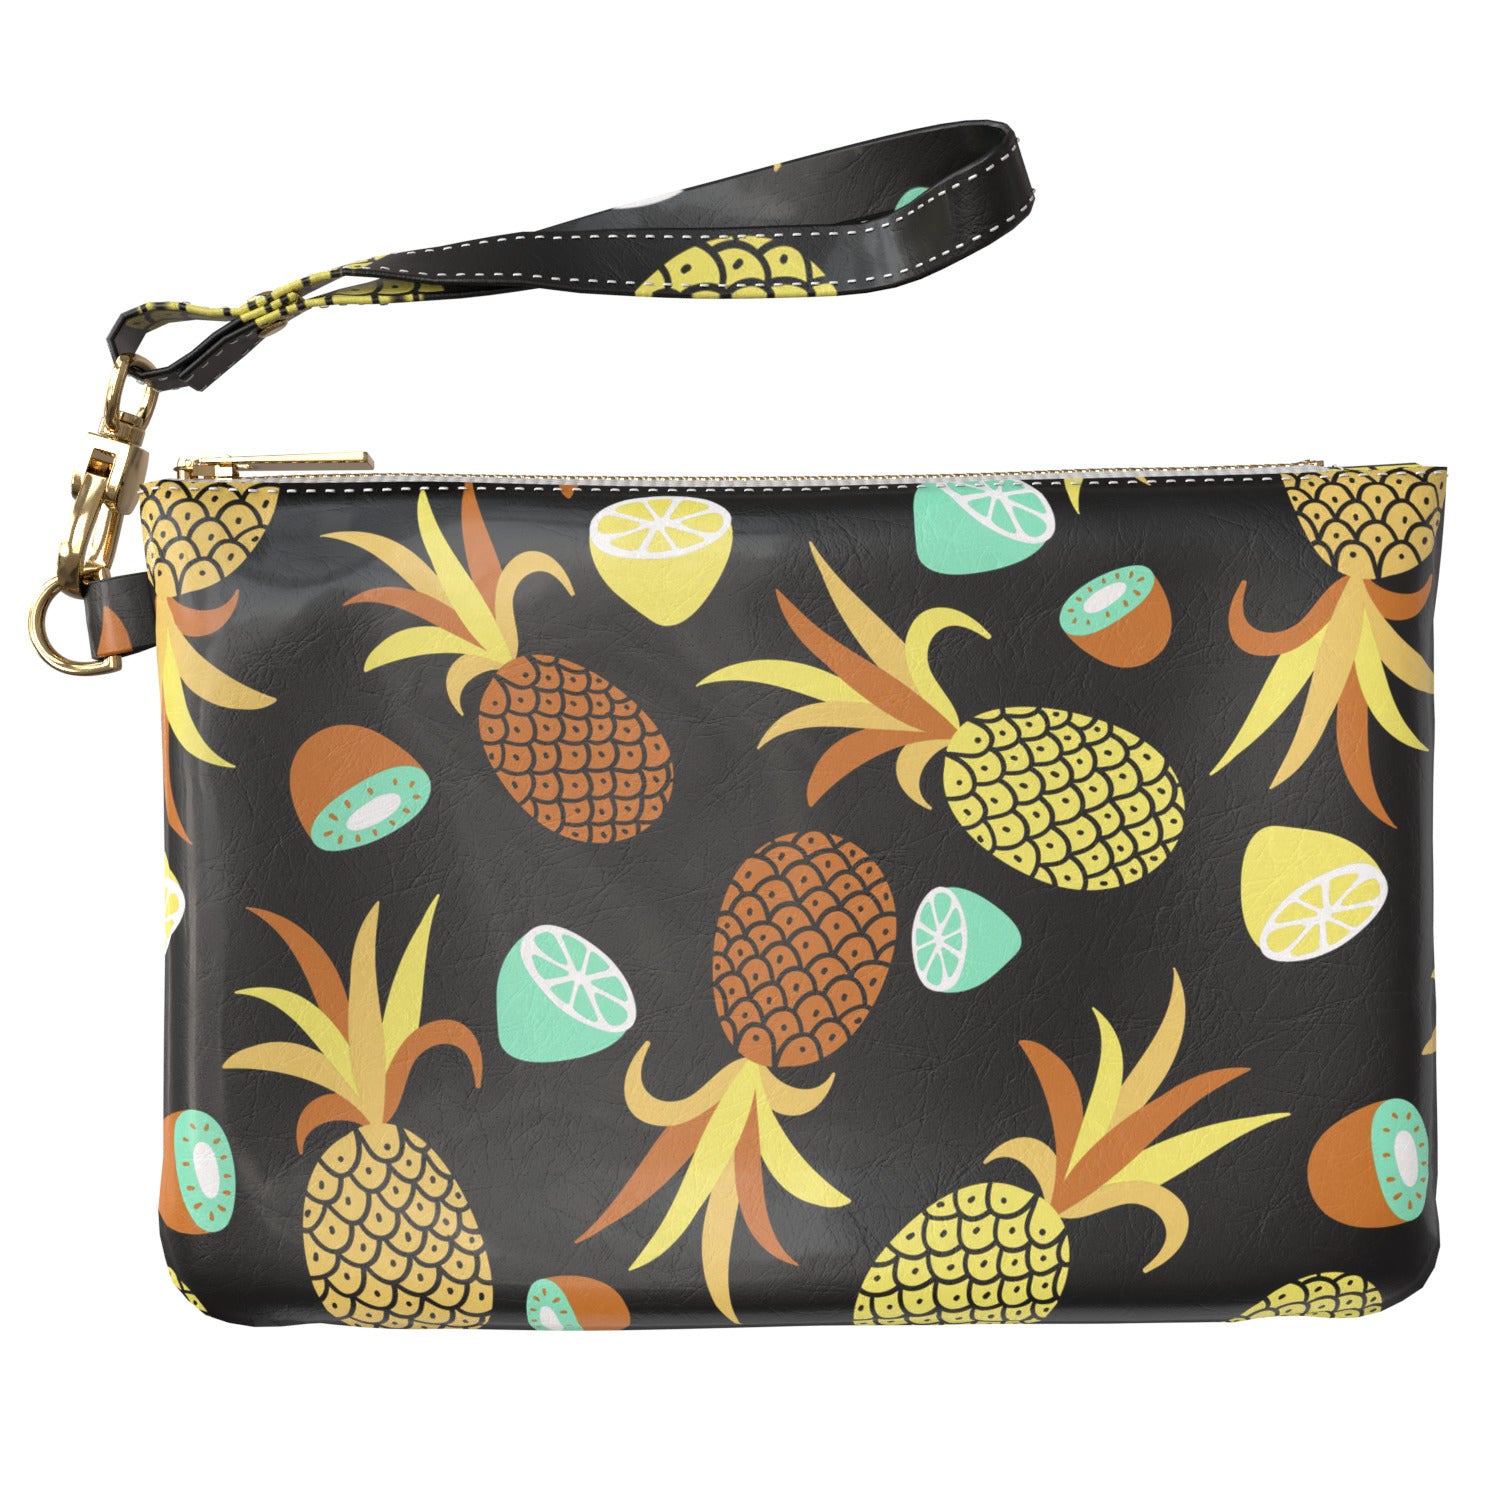 Lex Altern Makeup Bag Pineapple Pattern